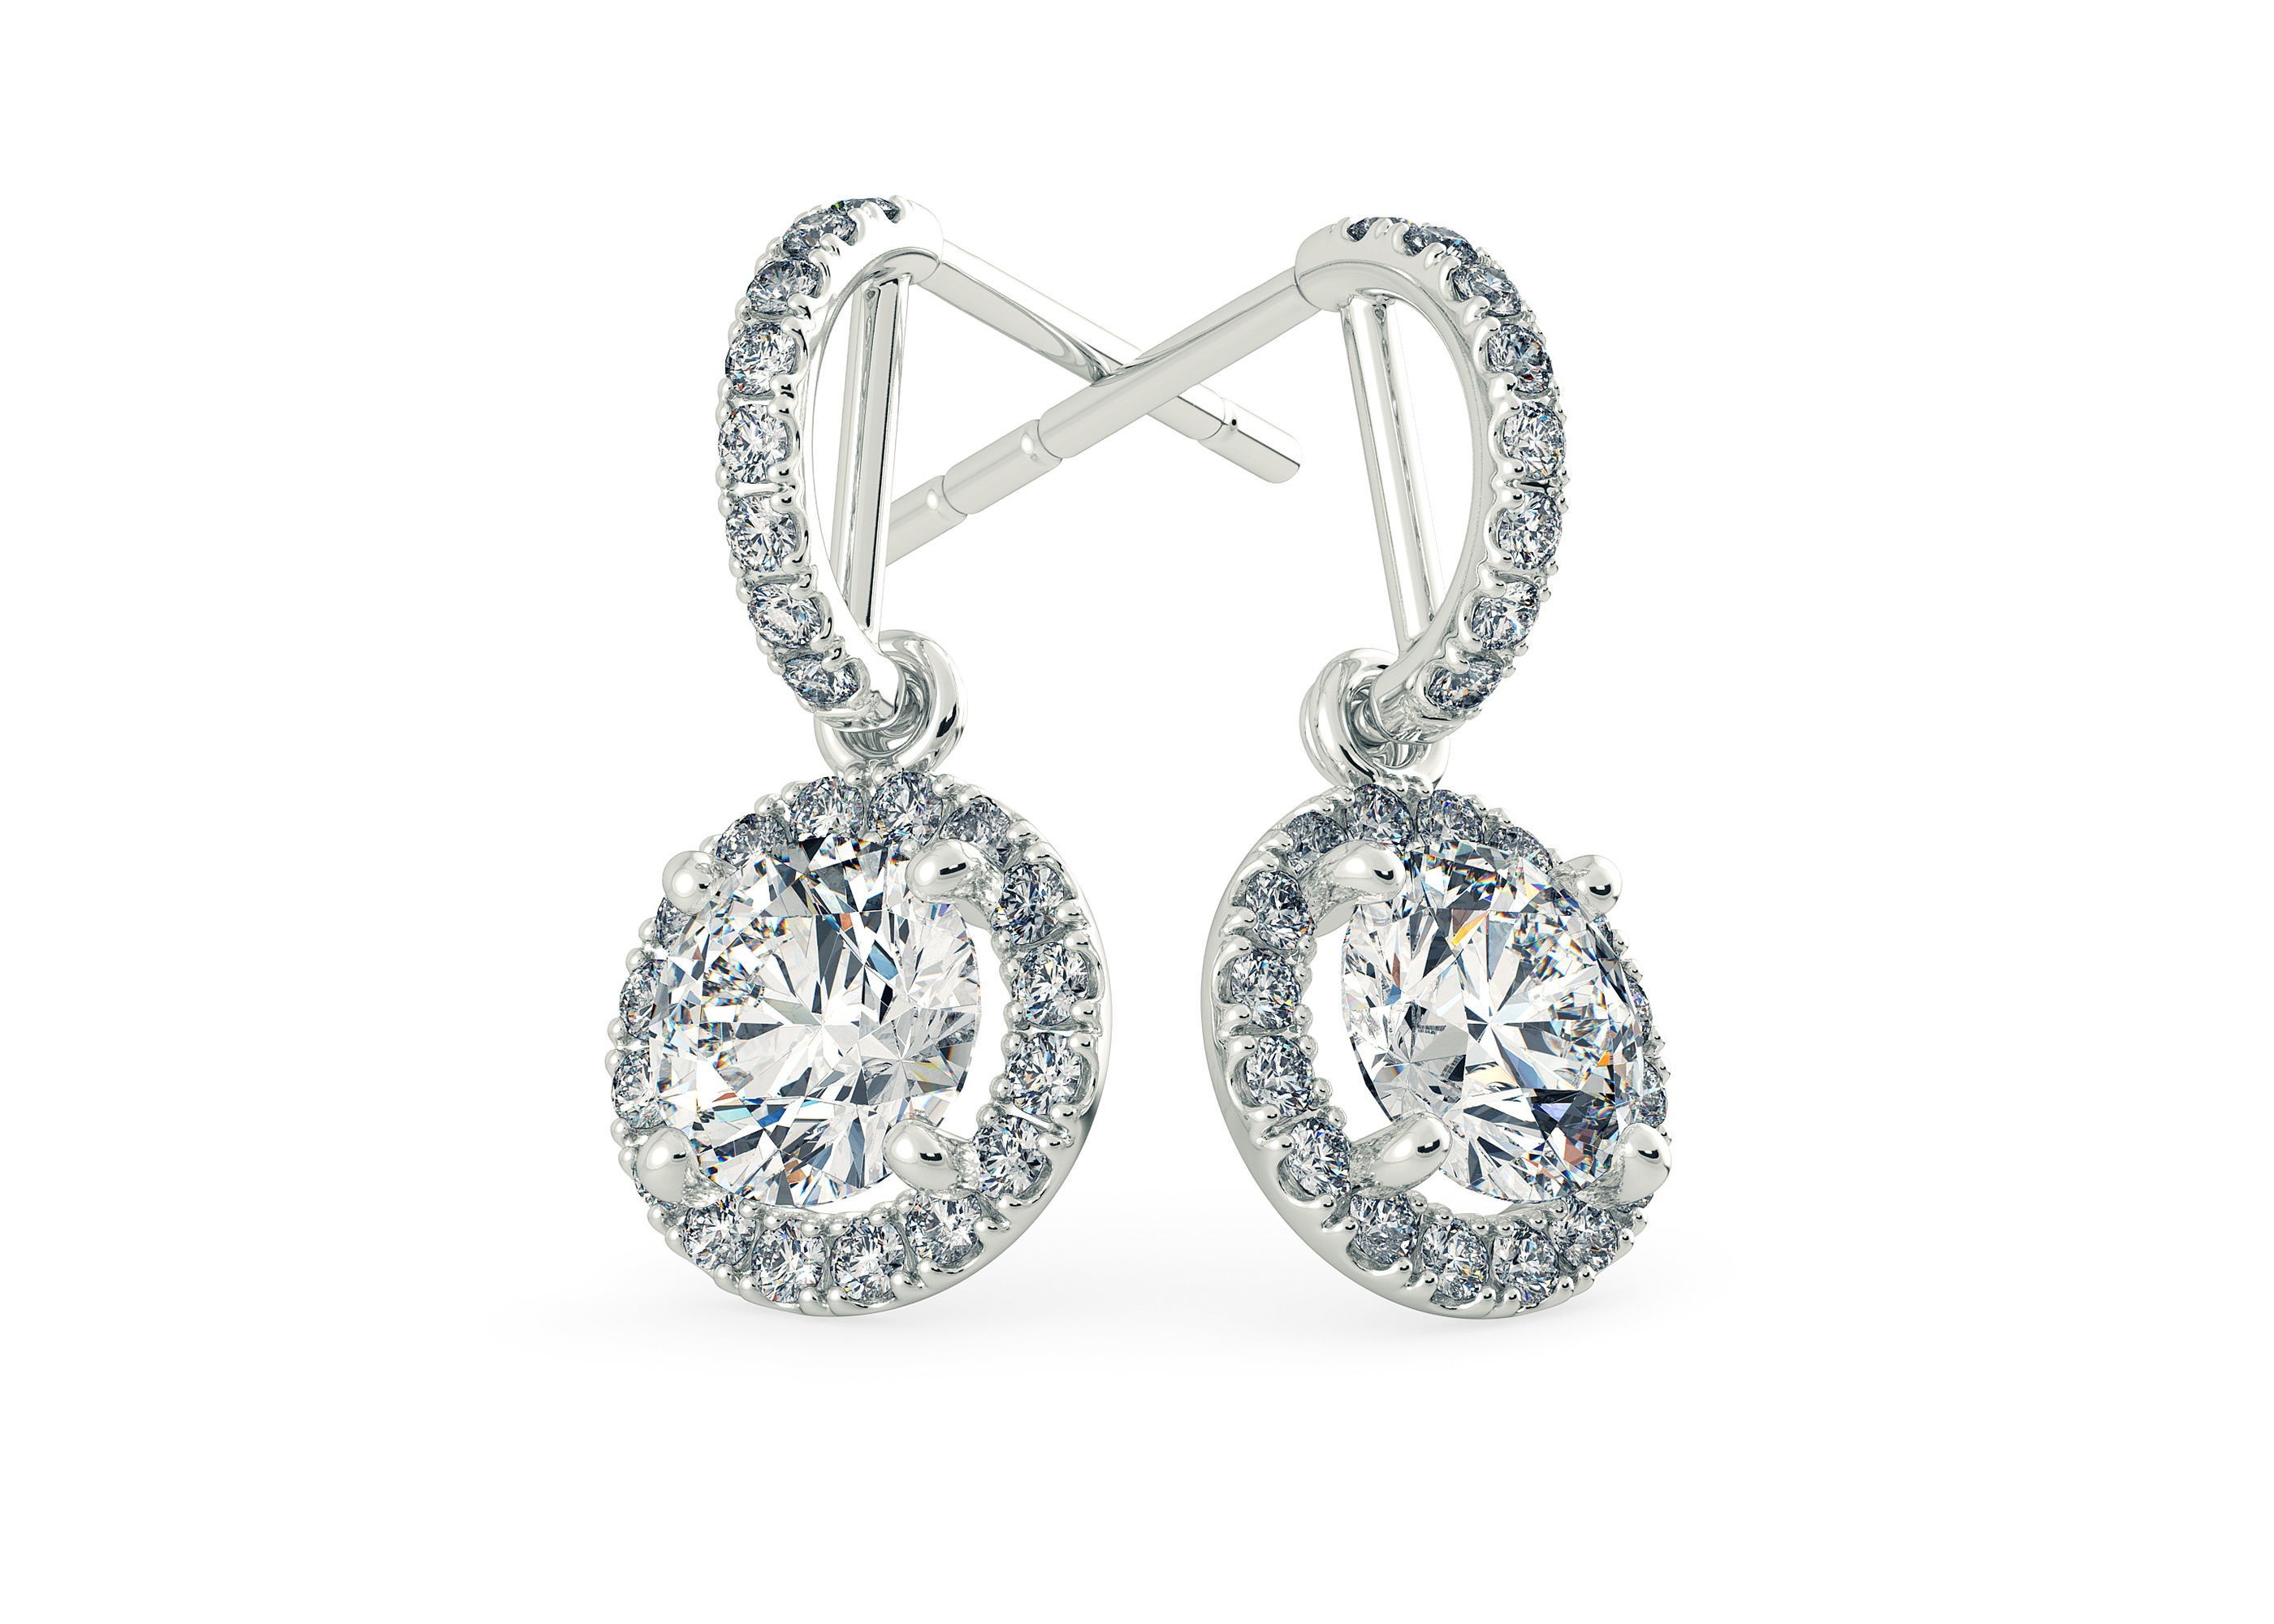 Bijou Round Brilliant Diamond Drop Earrings in Platinum with Screw Backs